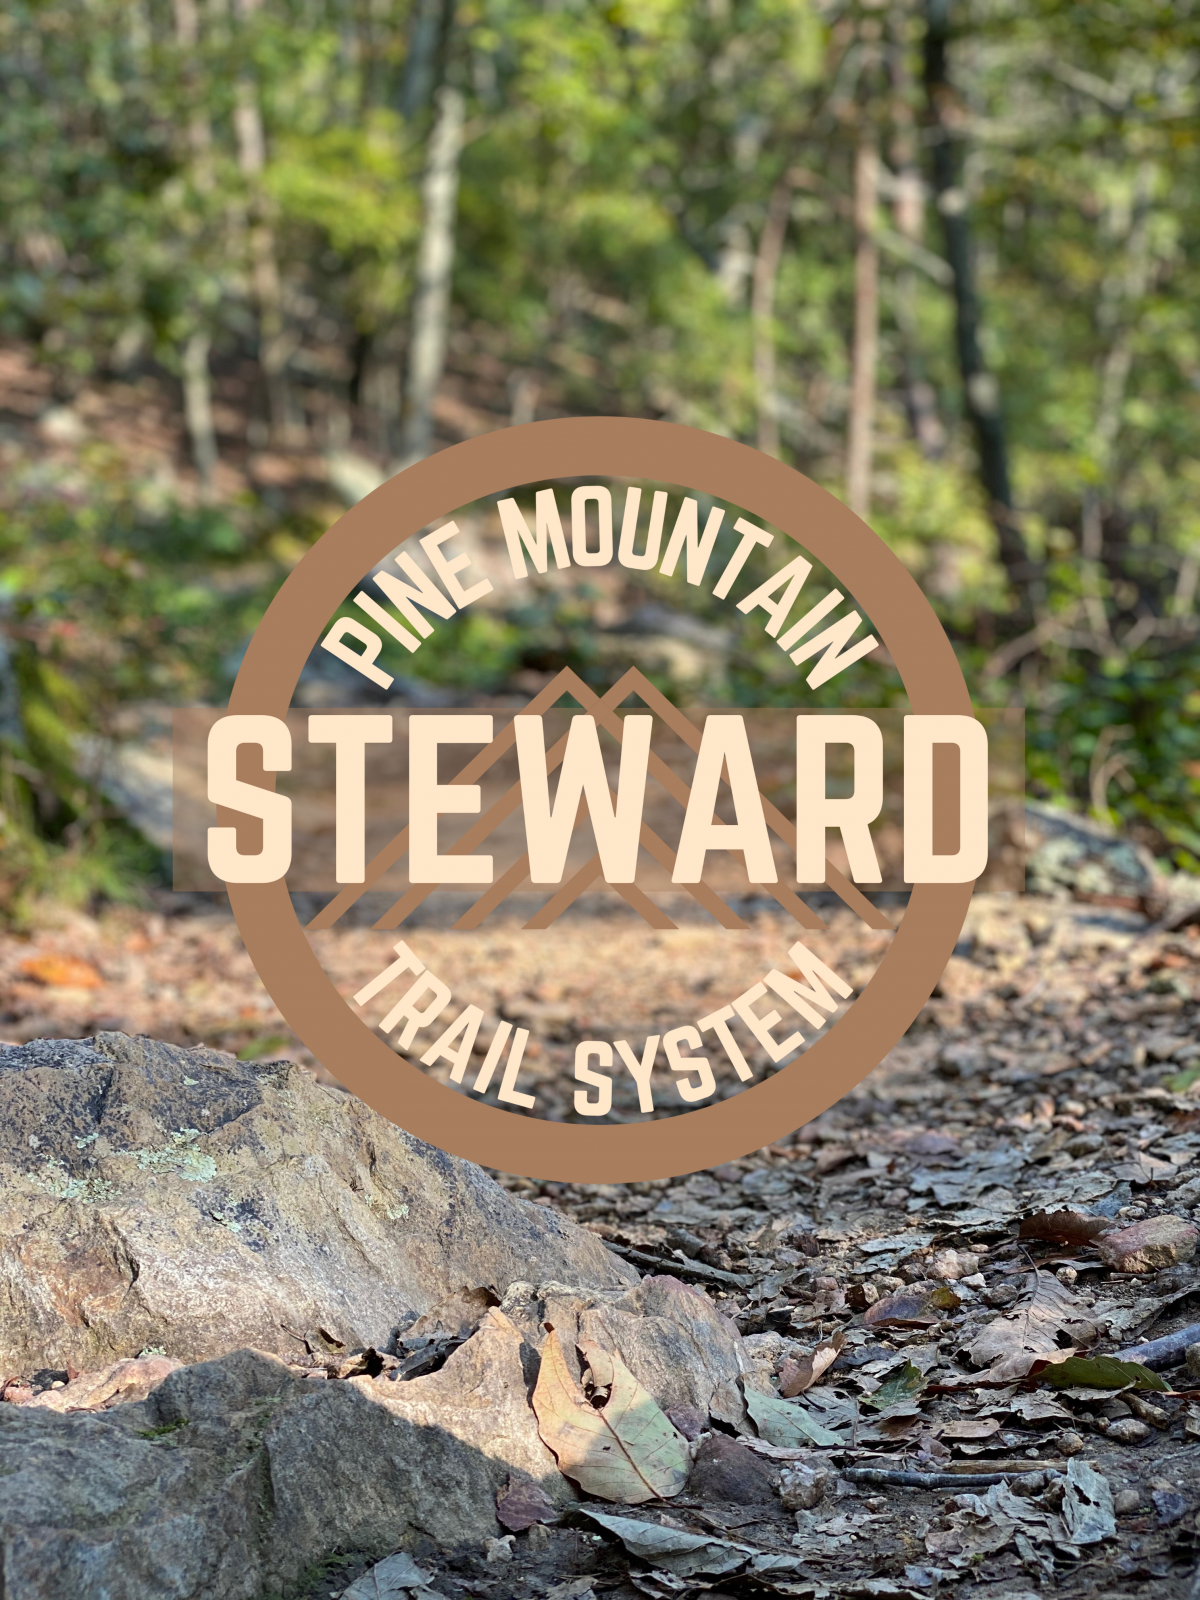 Pine Mountain Trail System Steward